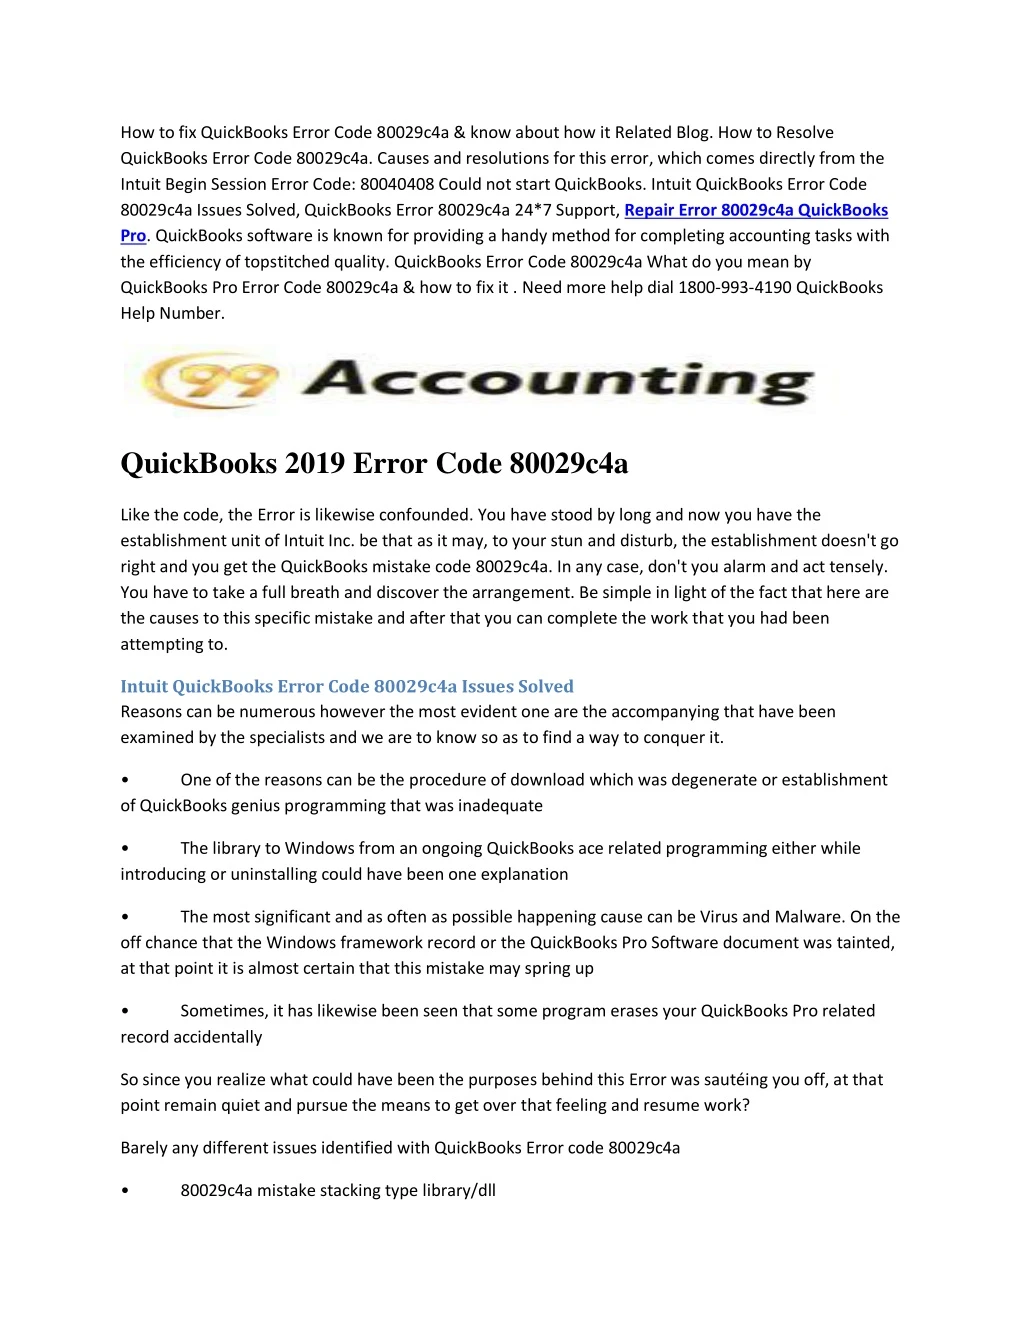 how to fix quickbooks error code 80029c4a know